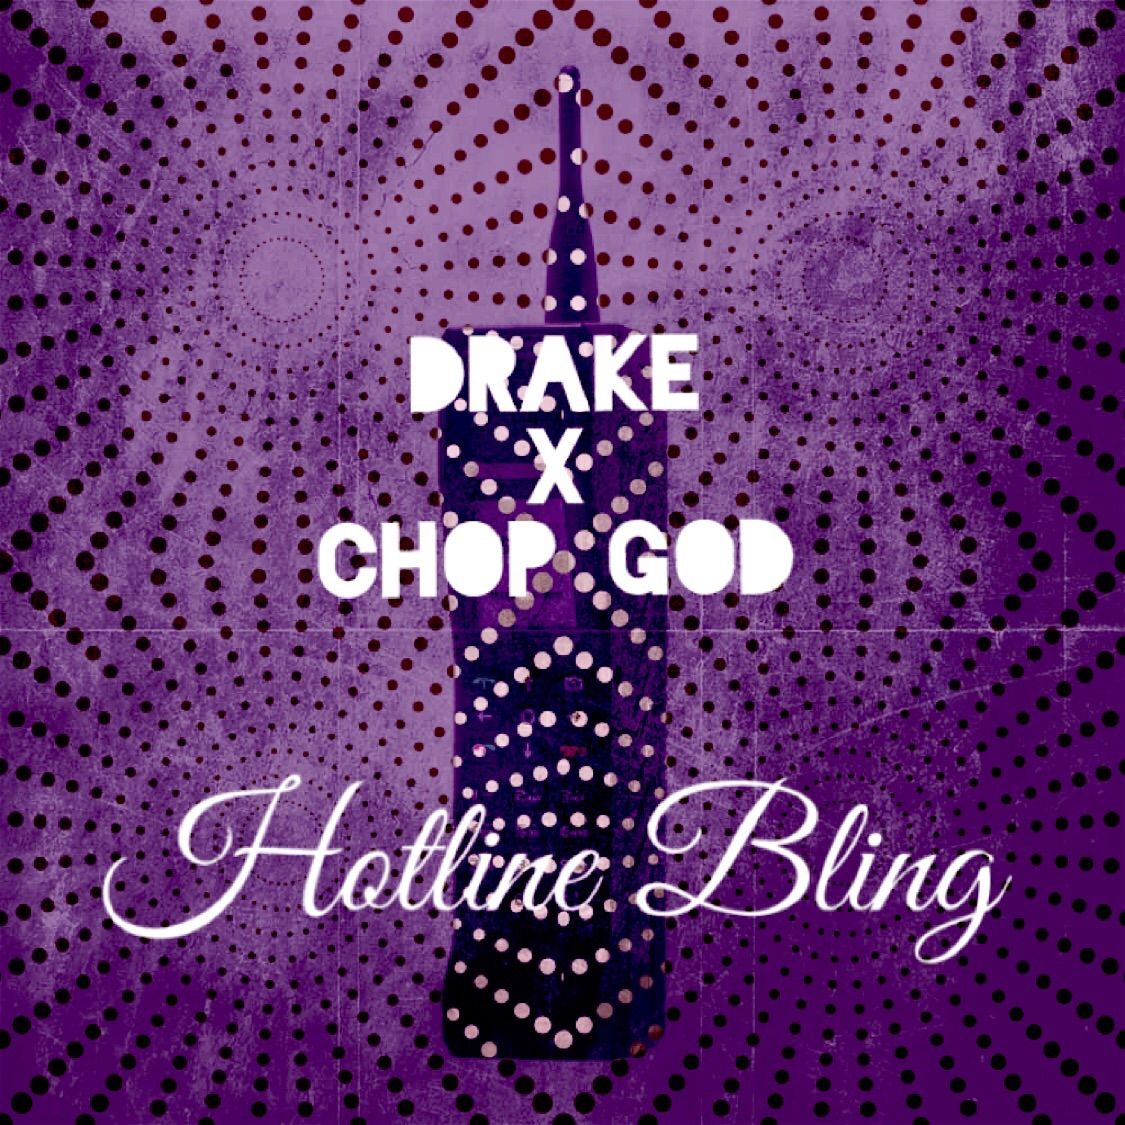 Drake hotline bling free download